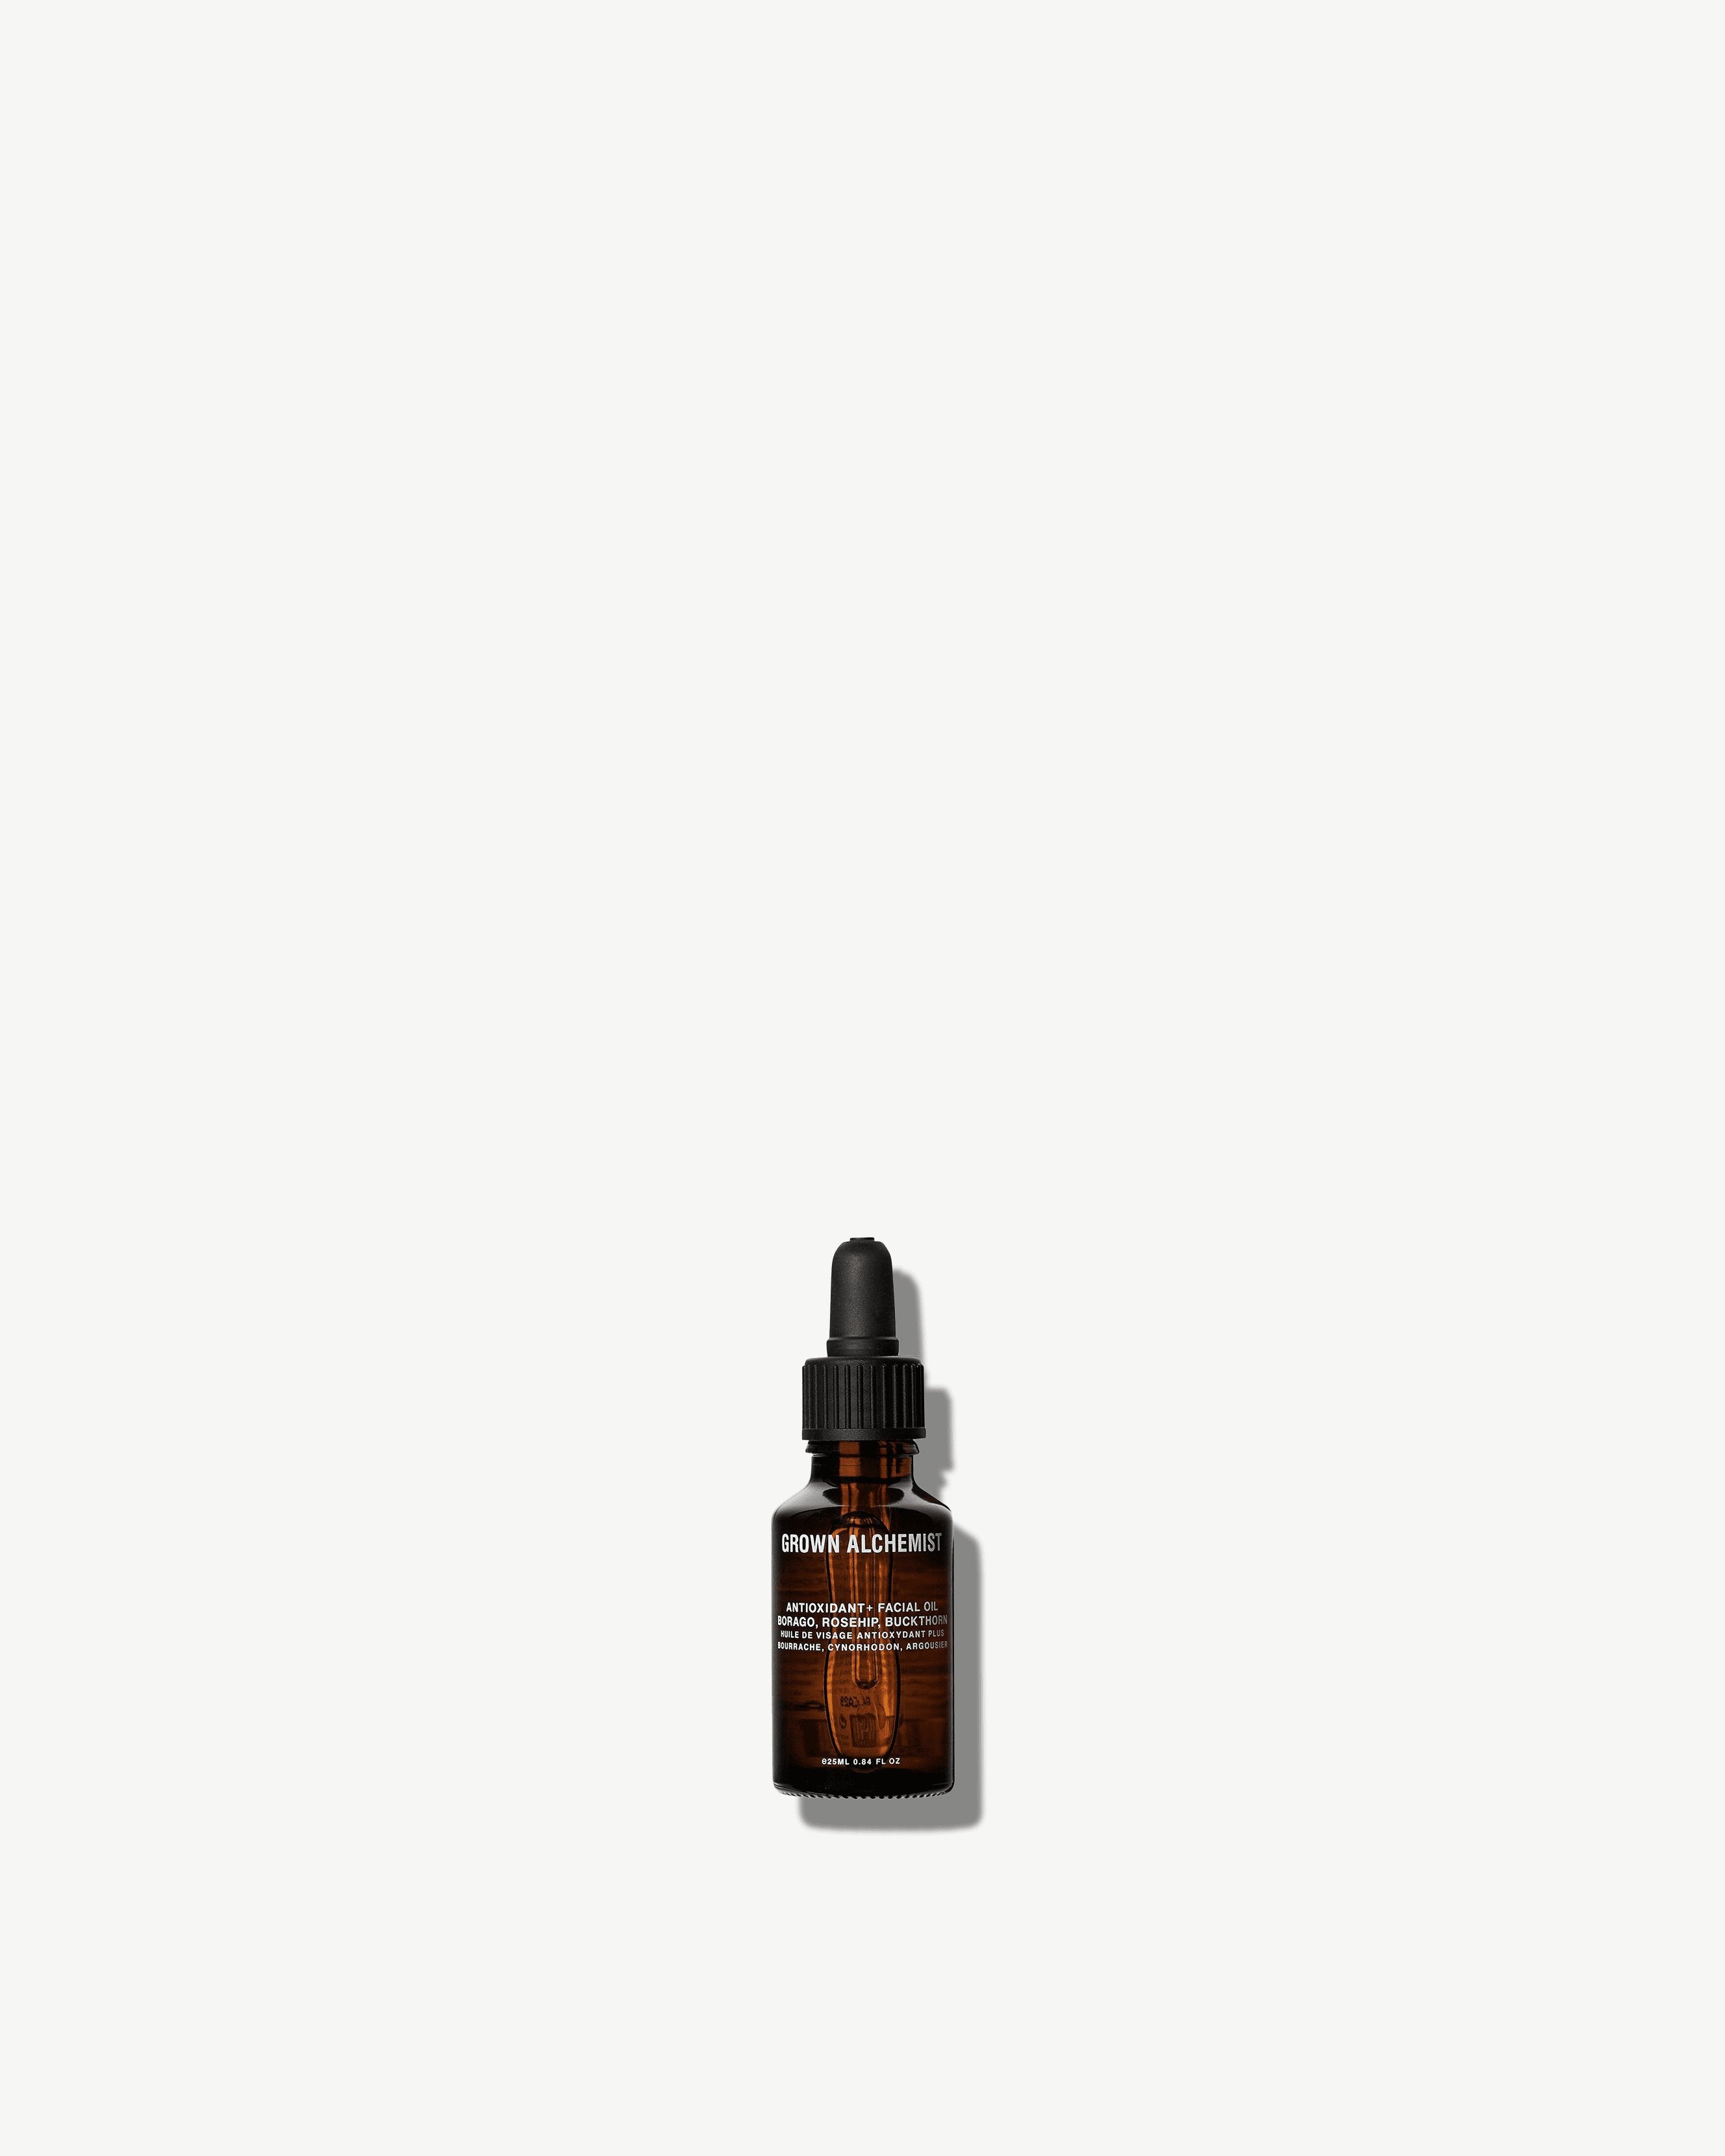 Grown Alchemist Antioxidant + Oil Natural - Credo Moisturizer Oil – Facial Clean